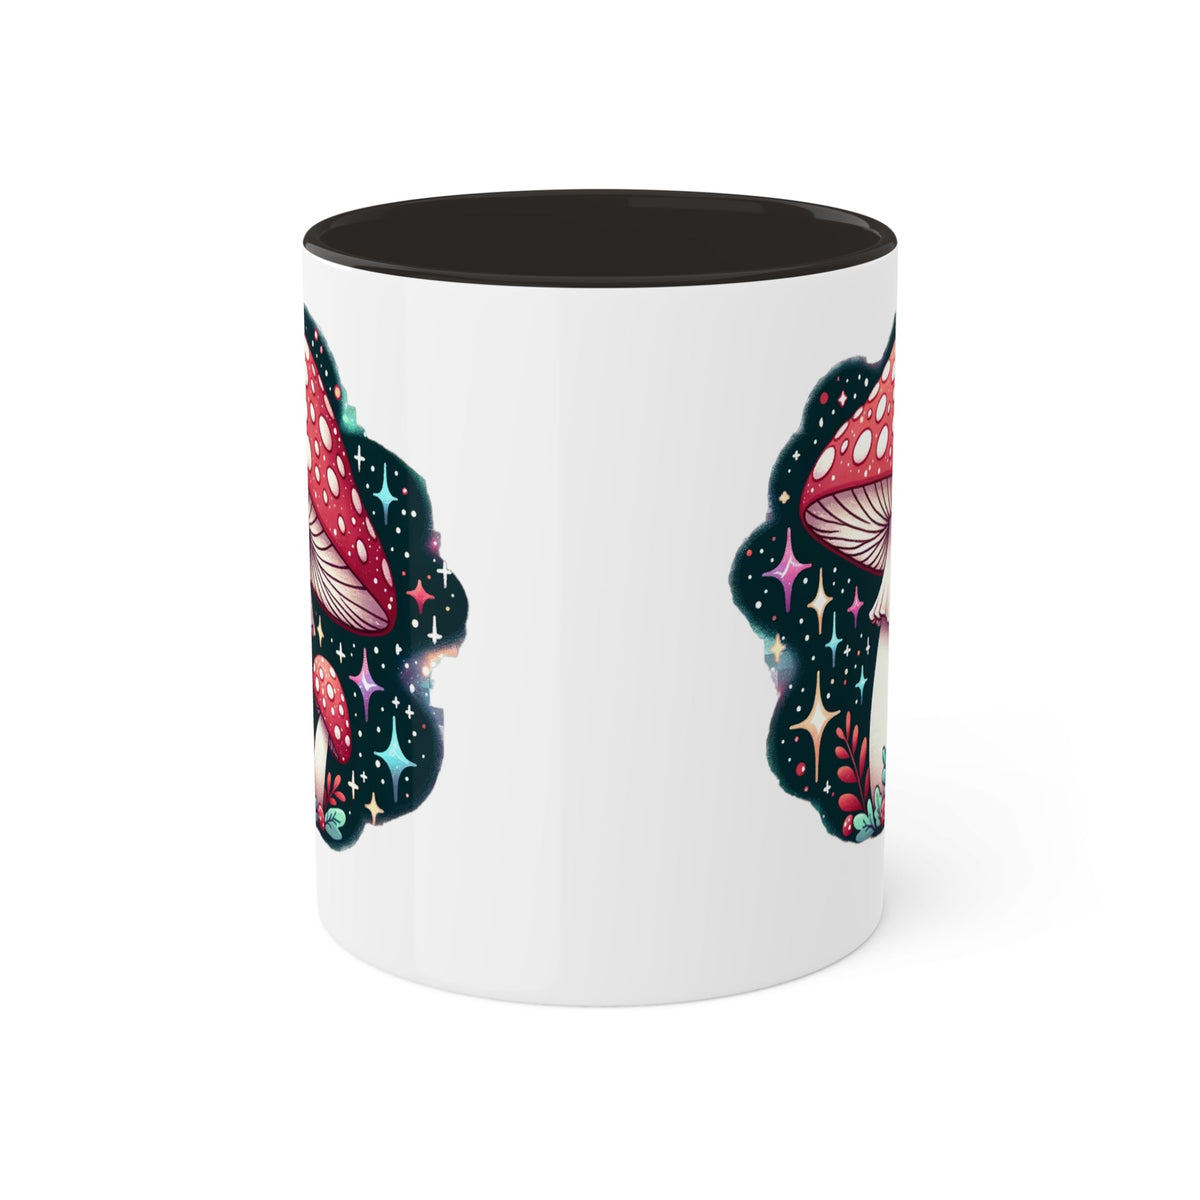 Celestial Mushroom Ceramic Mug, 11oz